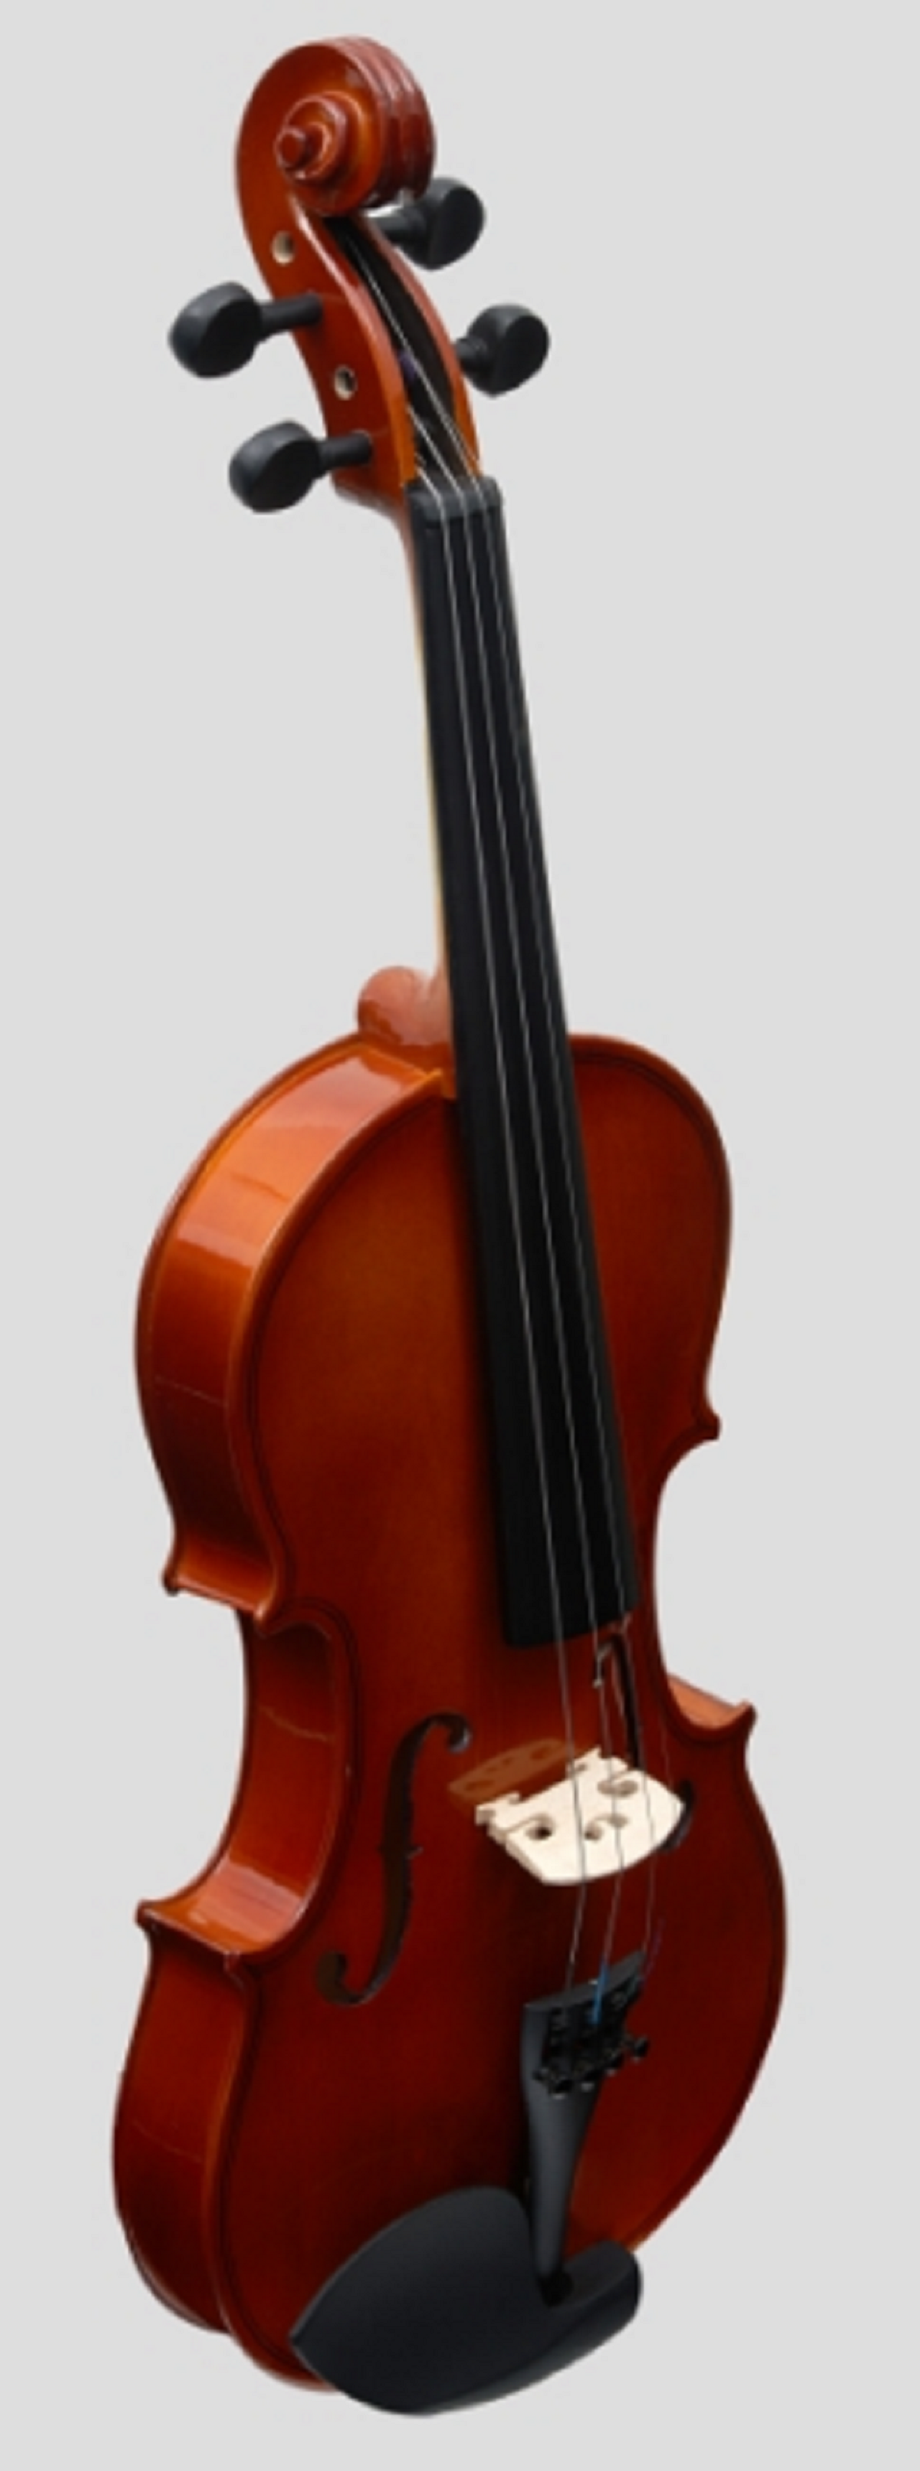 Inneo violin -linden plywood violin set with carbon fiber tailpiece